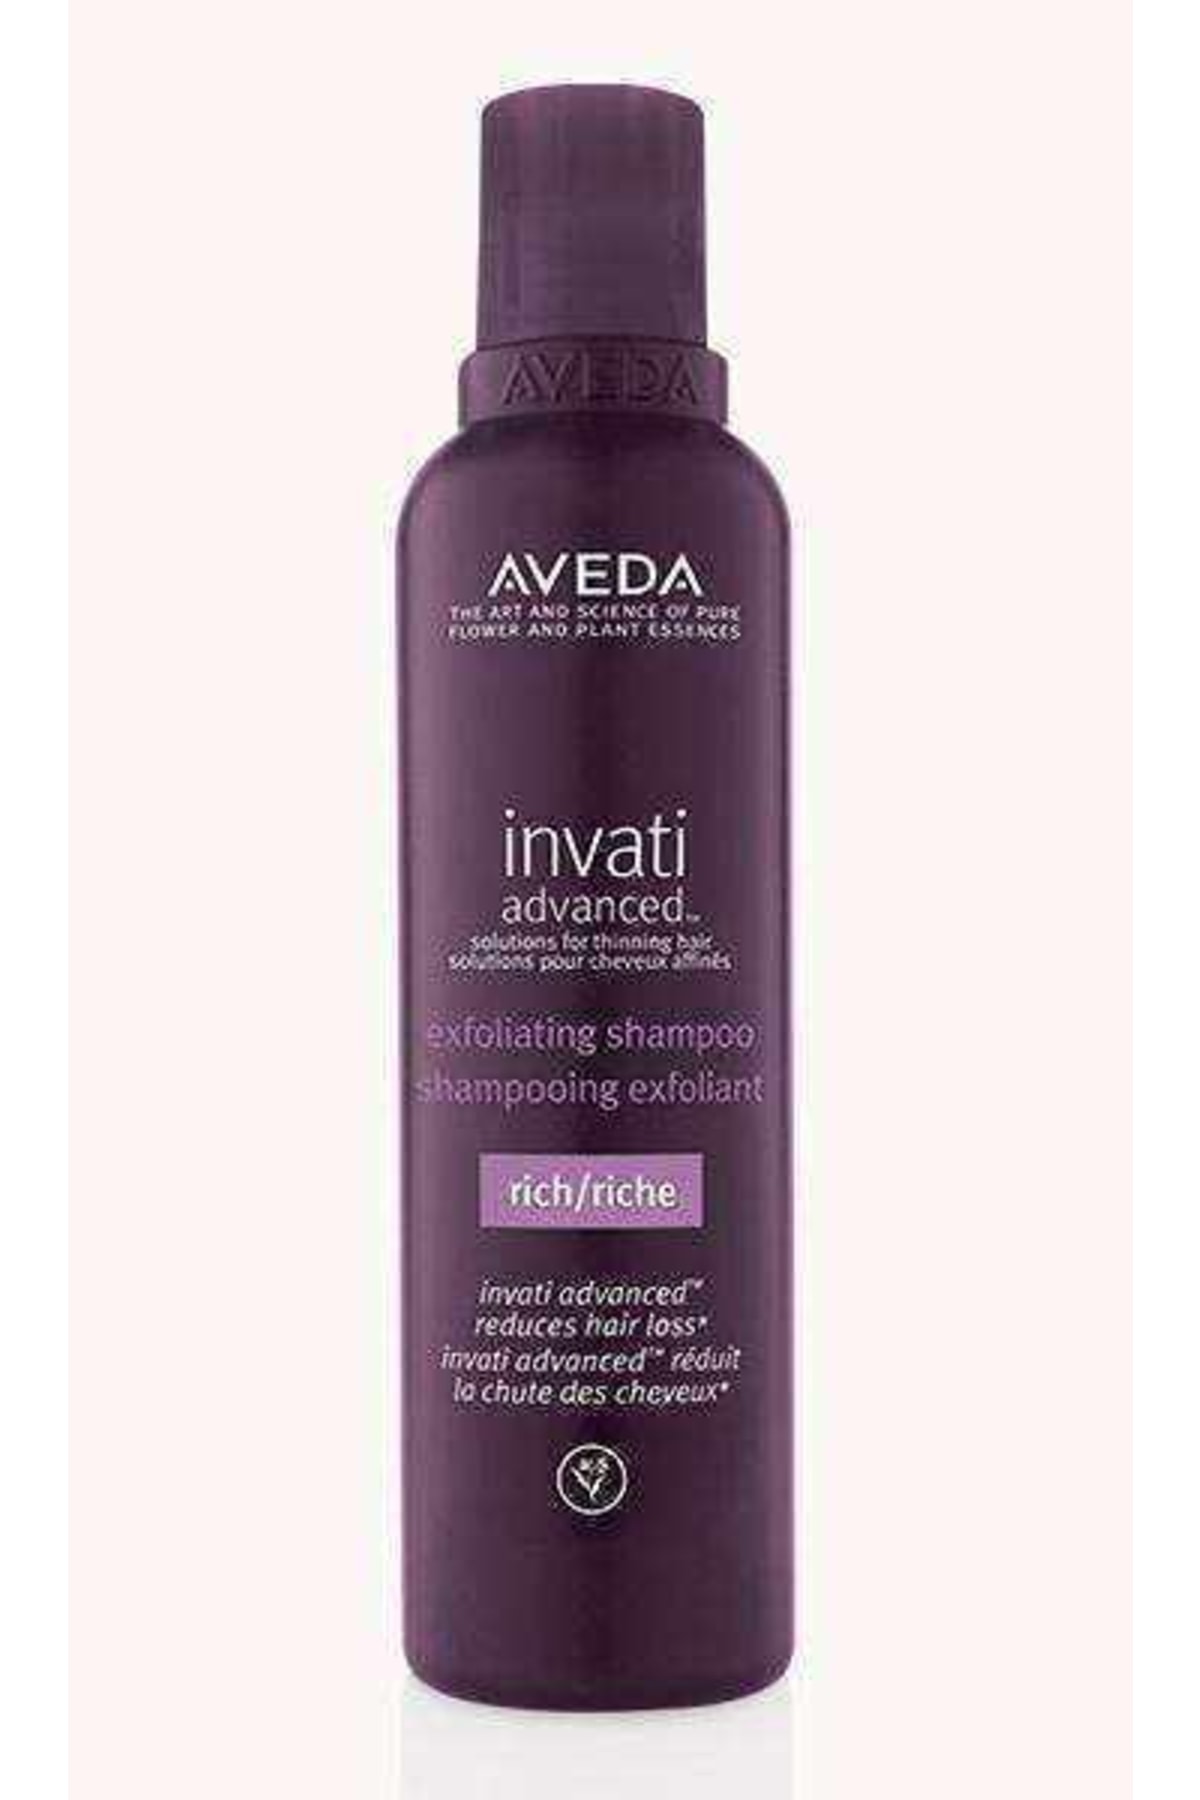 Aveda Invati Advanced Saç Dökülmesine Karşı Şampuan 200ml 018084016824